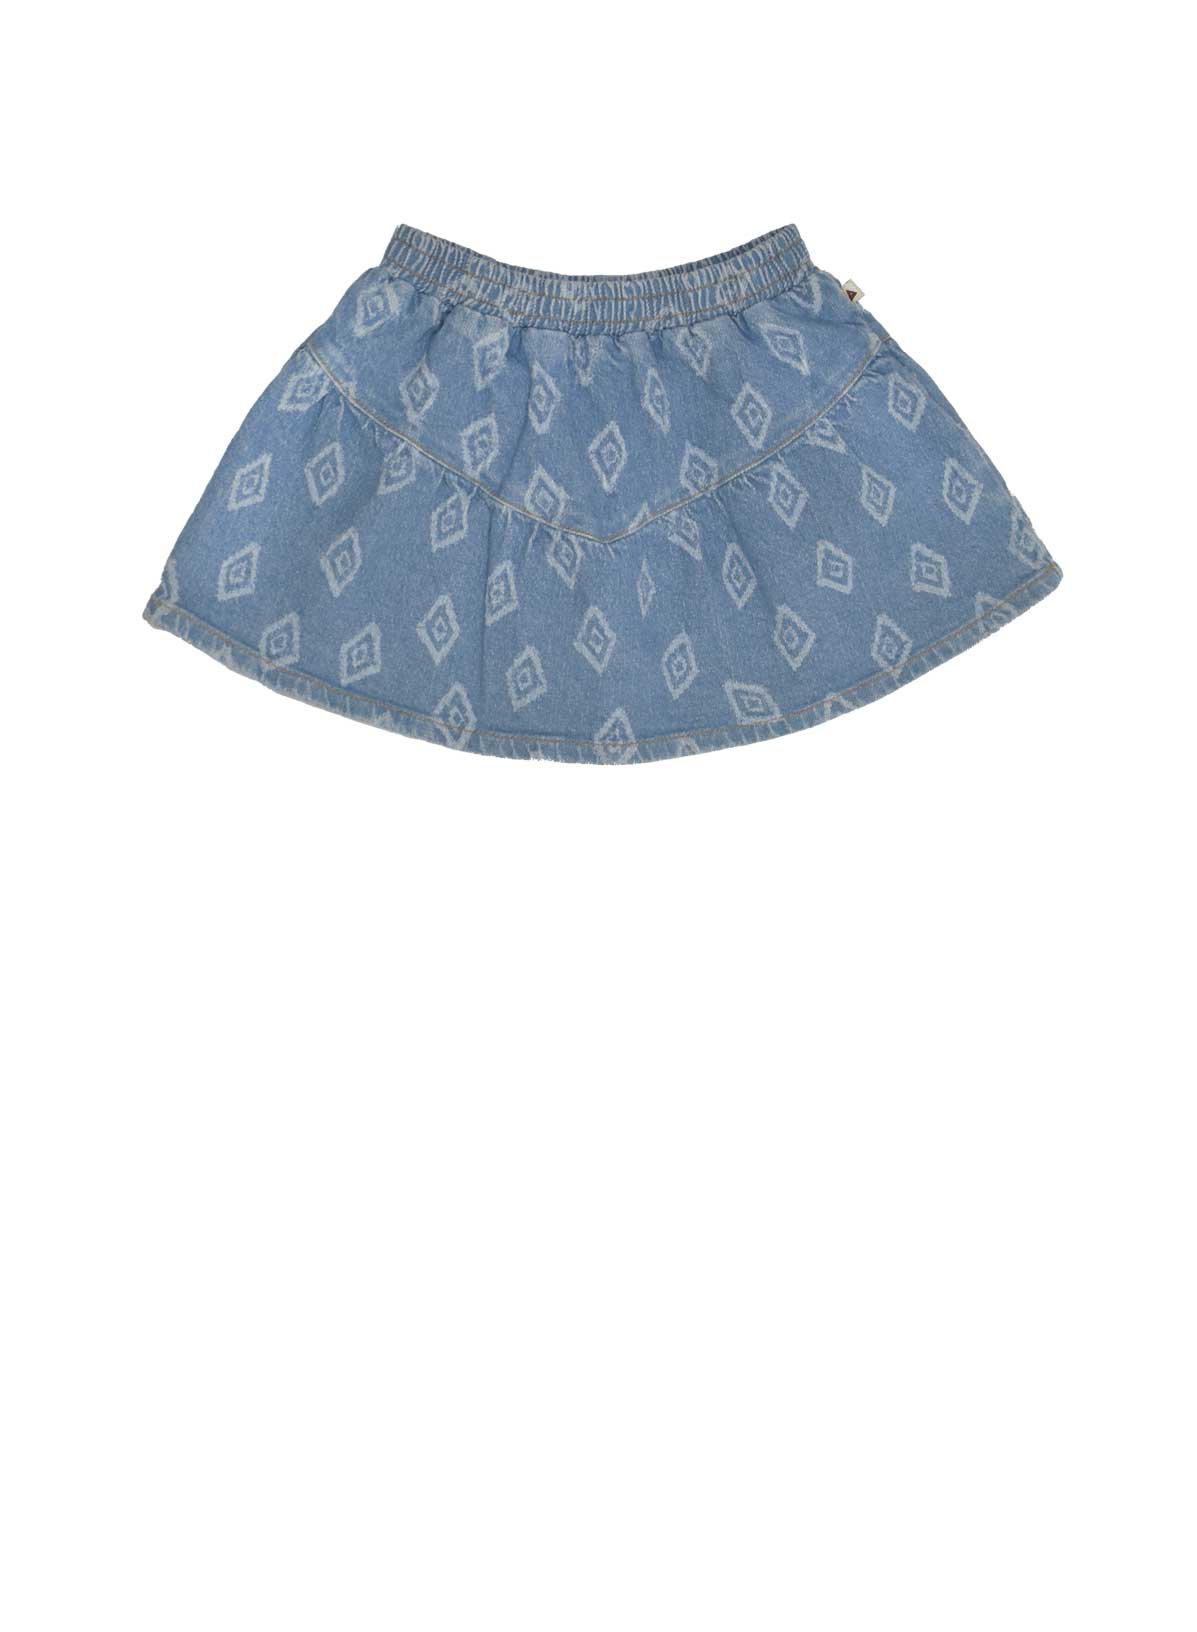 Children's Bleached Blue Denim Pattern Skirt (AM FIENE 03)